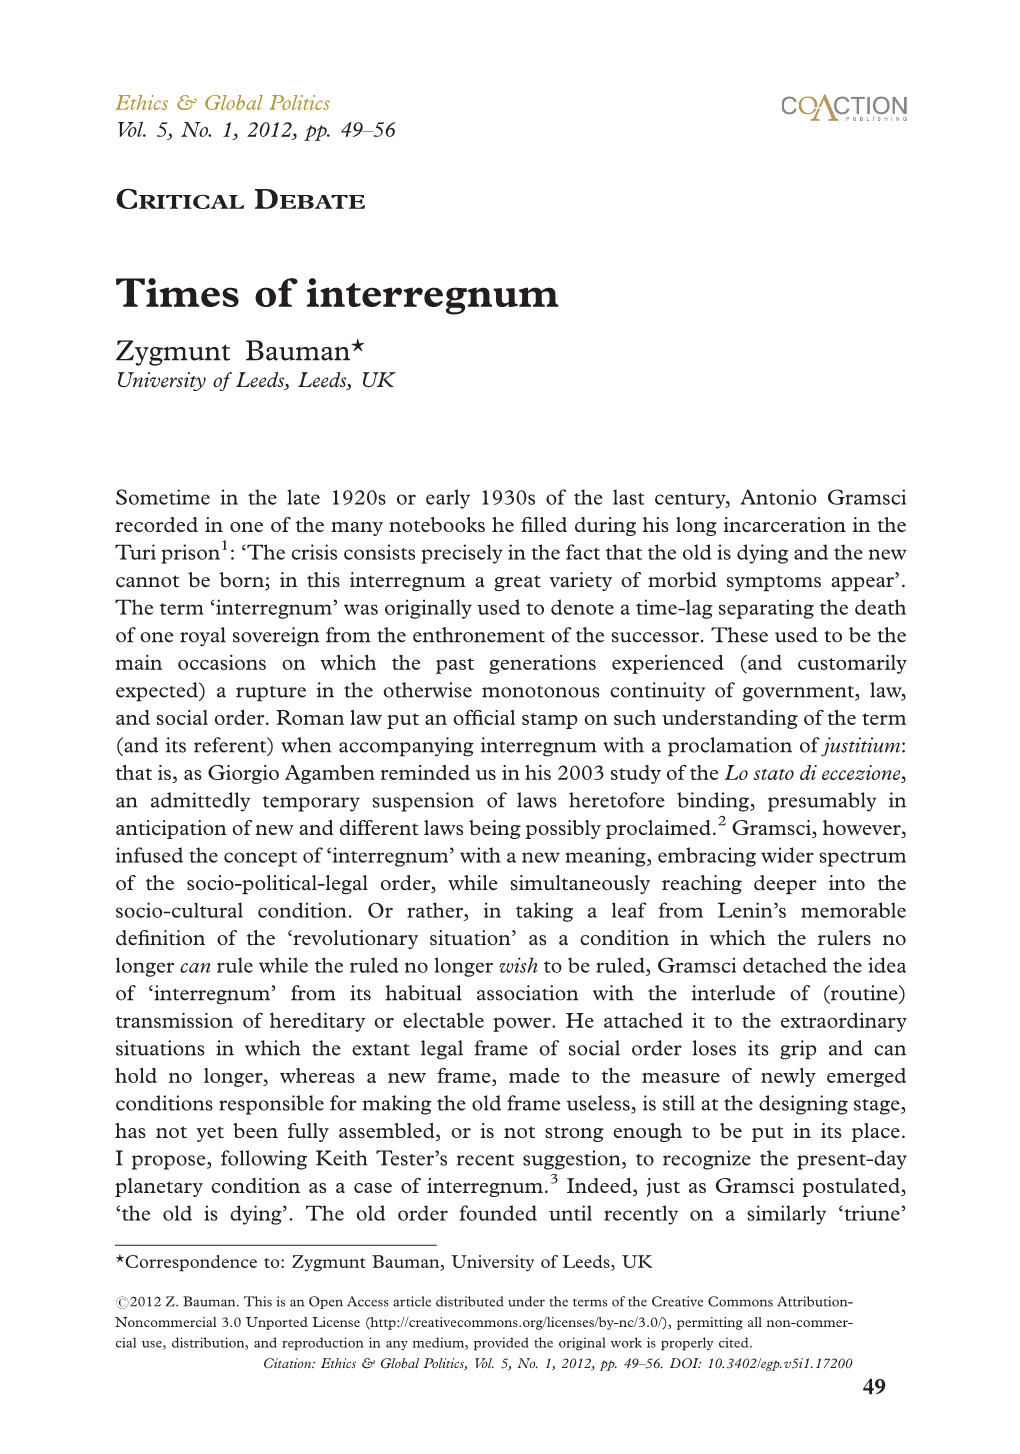 Times of Interregnum Zygmunt Bauman* University of Leeds, Leeds, UK